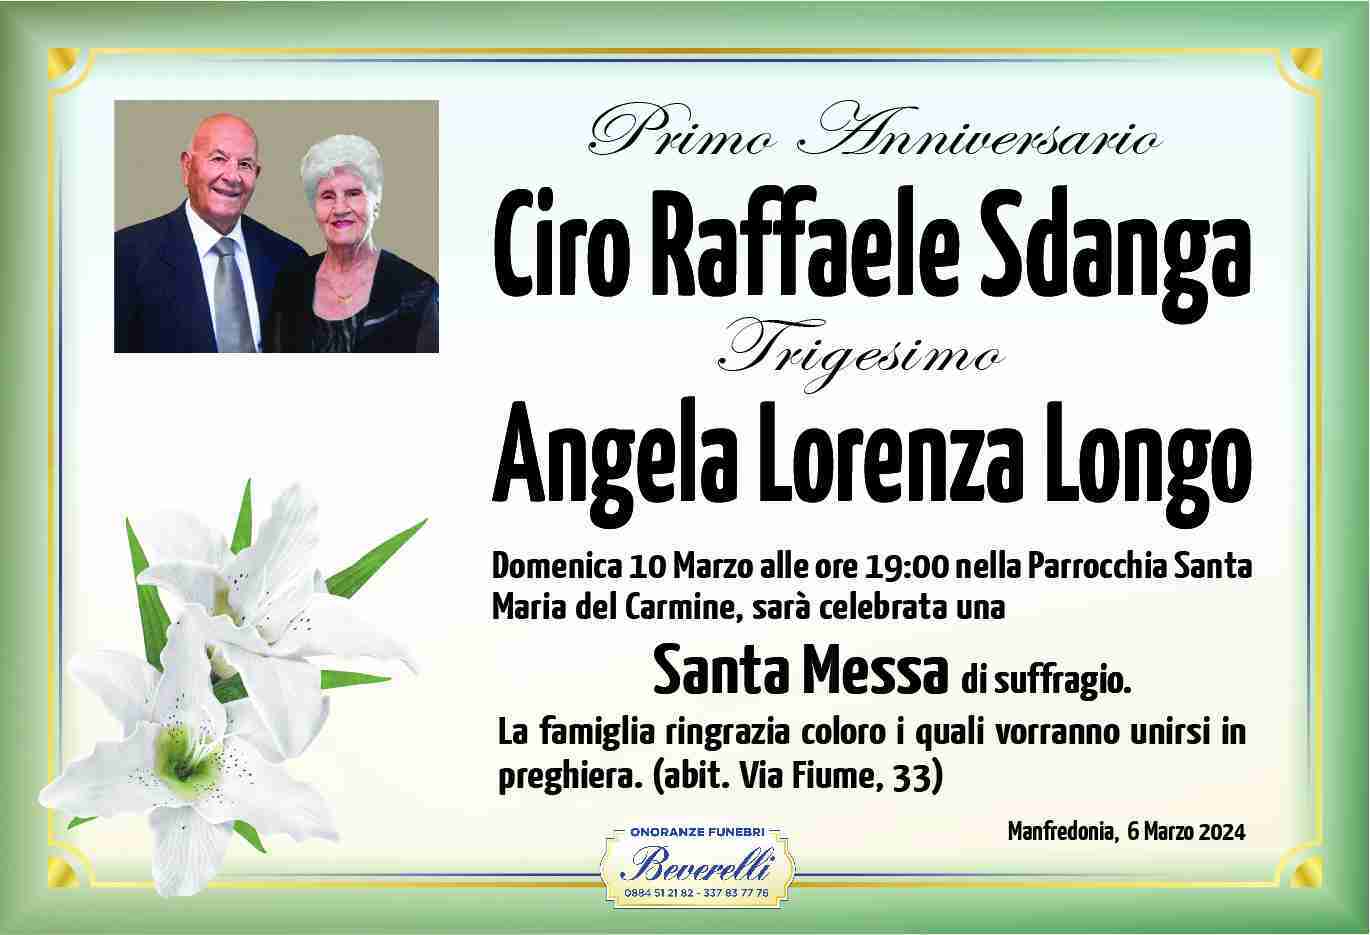 Angela Lorenza Longo